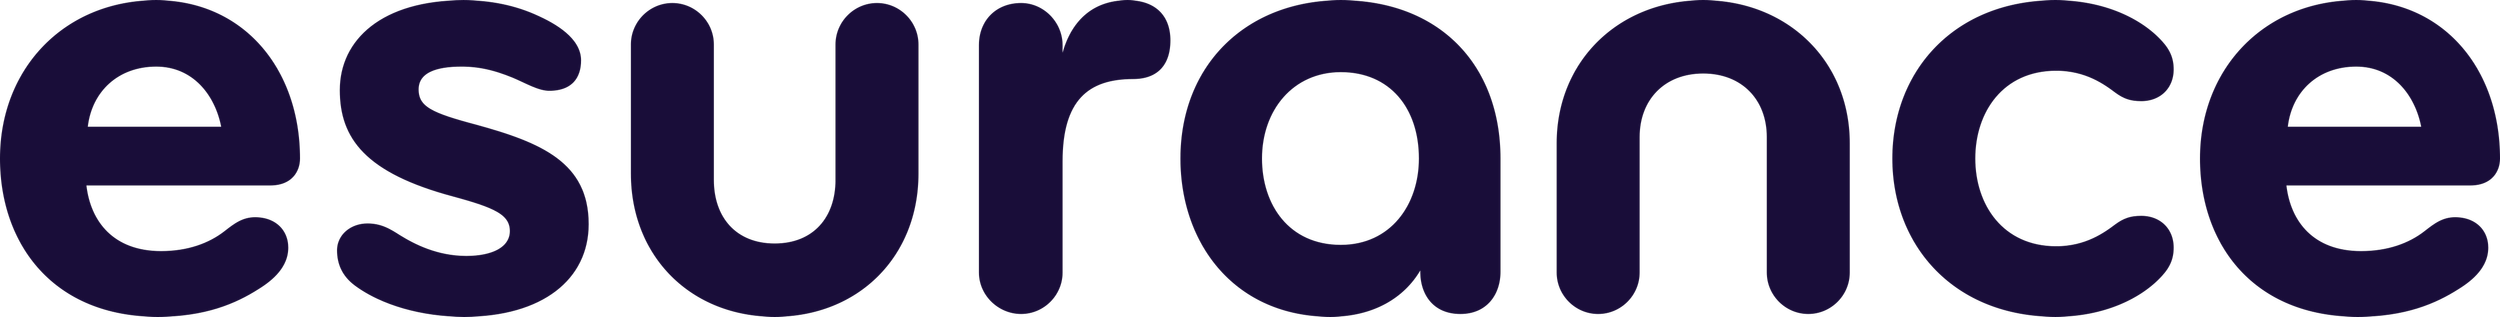 Esurance_Logo.png